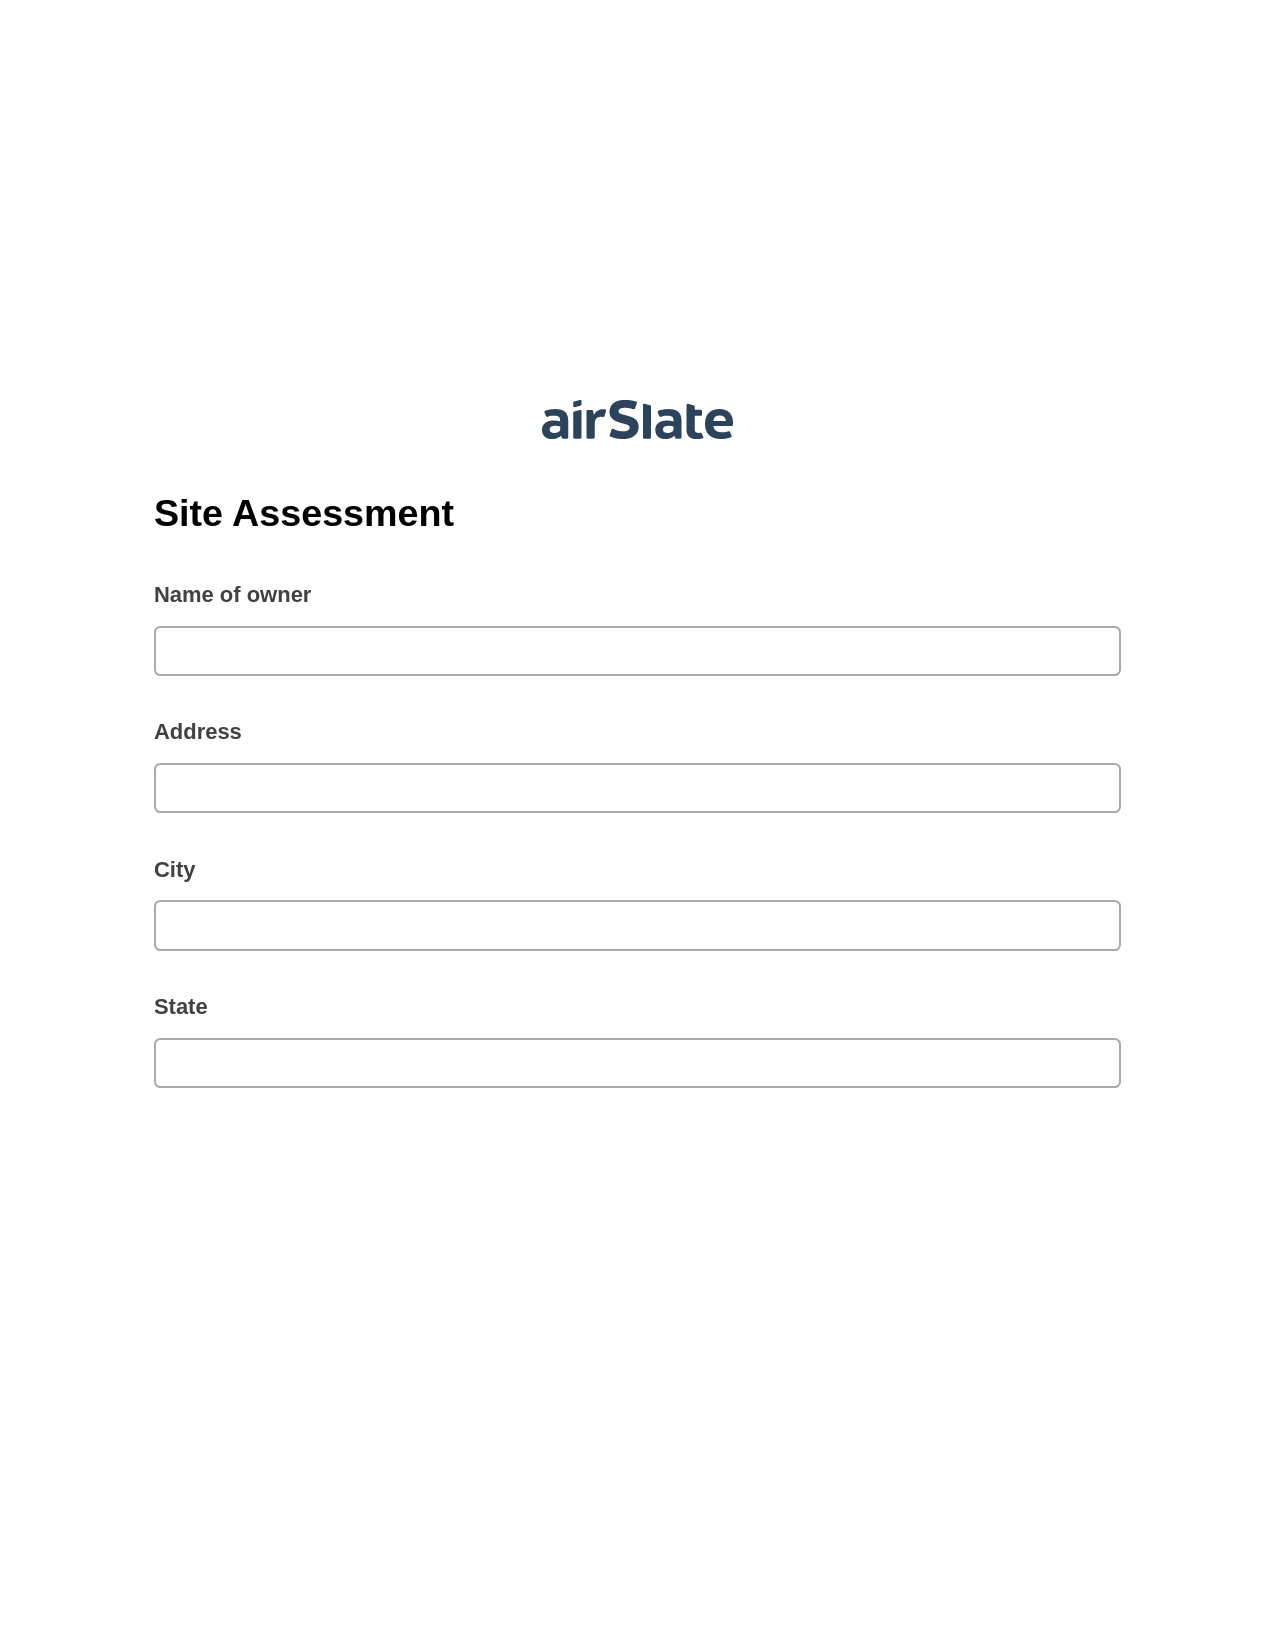 Site Assessment Pre-fill from CSV File Bot, Jira Bot, Dropbox Bot